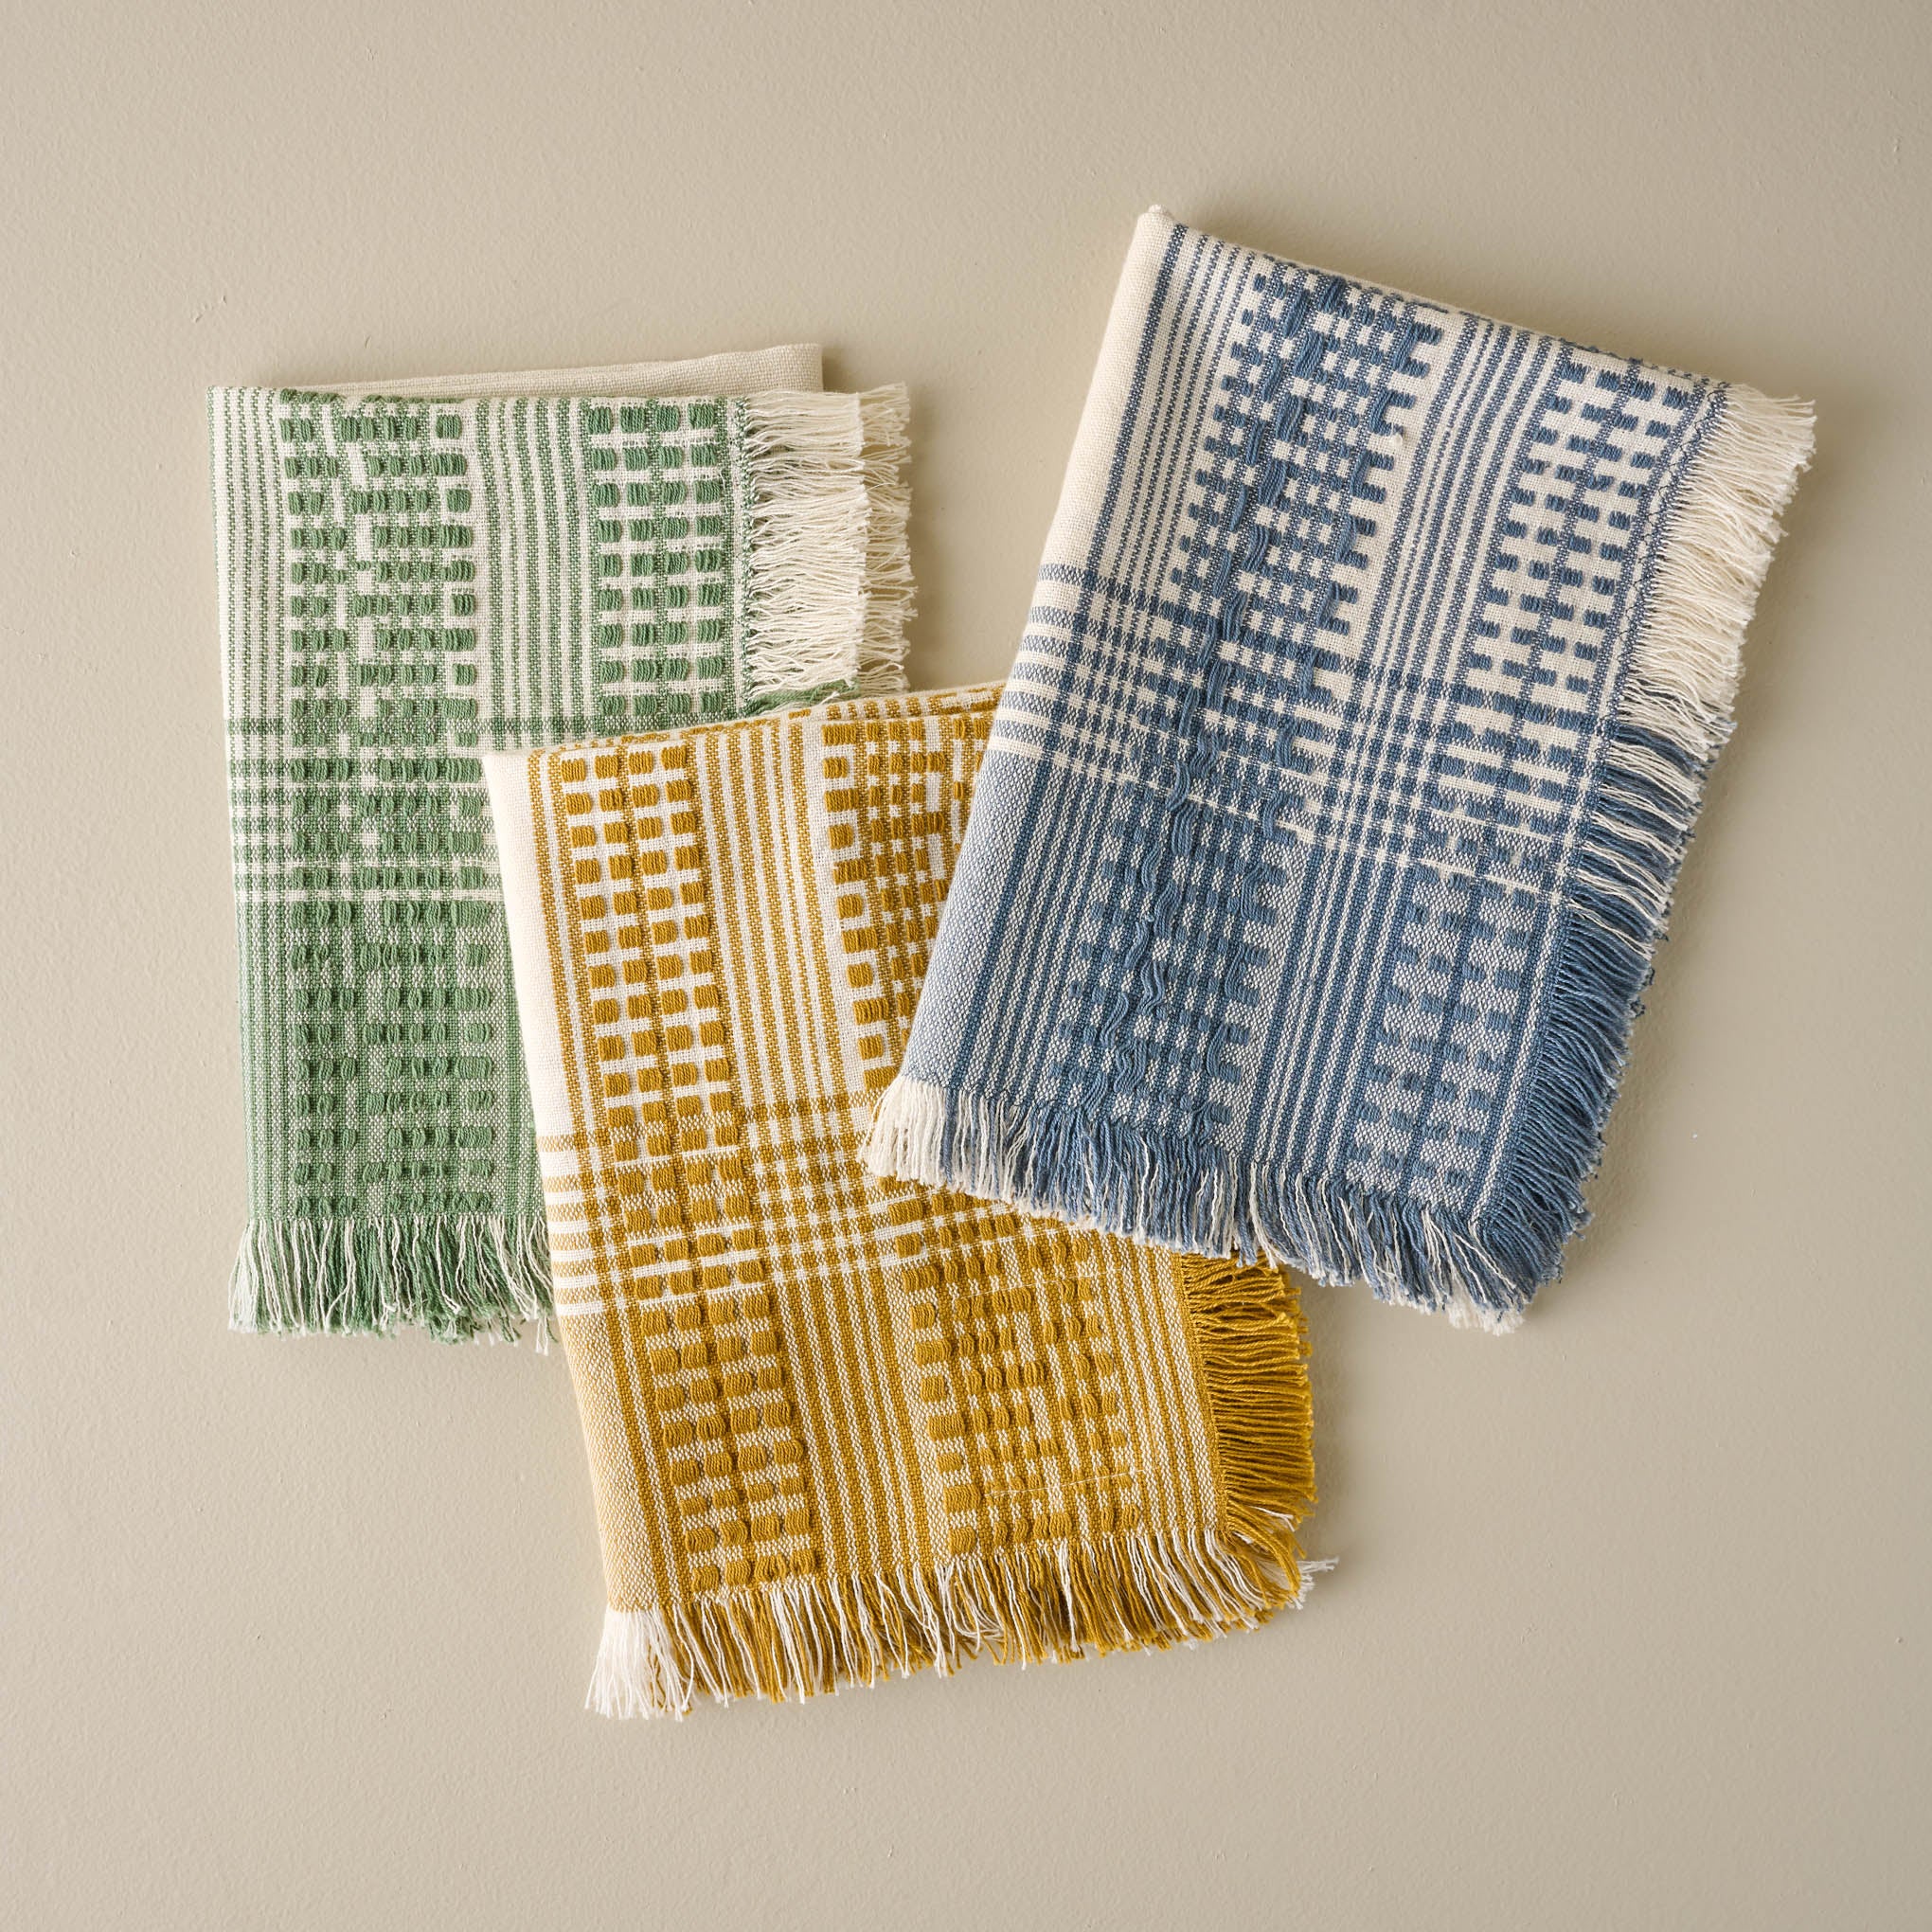 Magnolia Plaid Makers Mark Tea Towel in three color variants $16.00